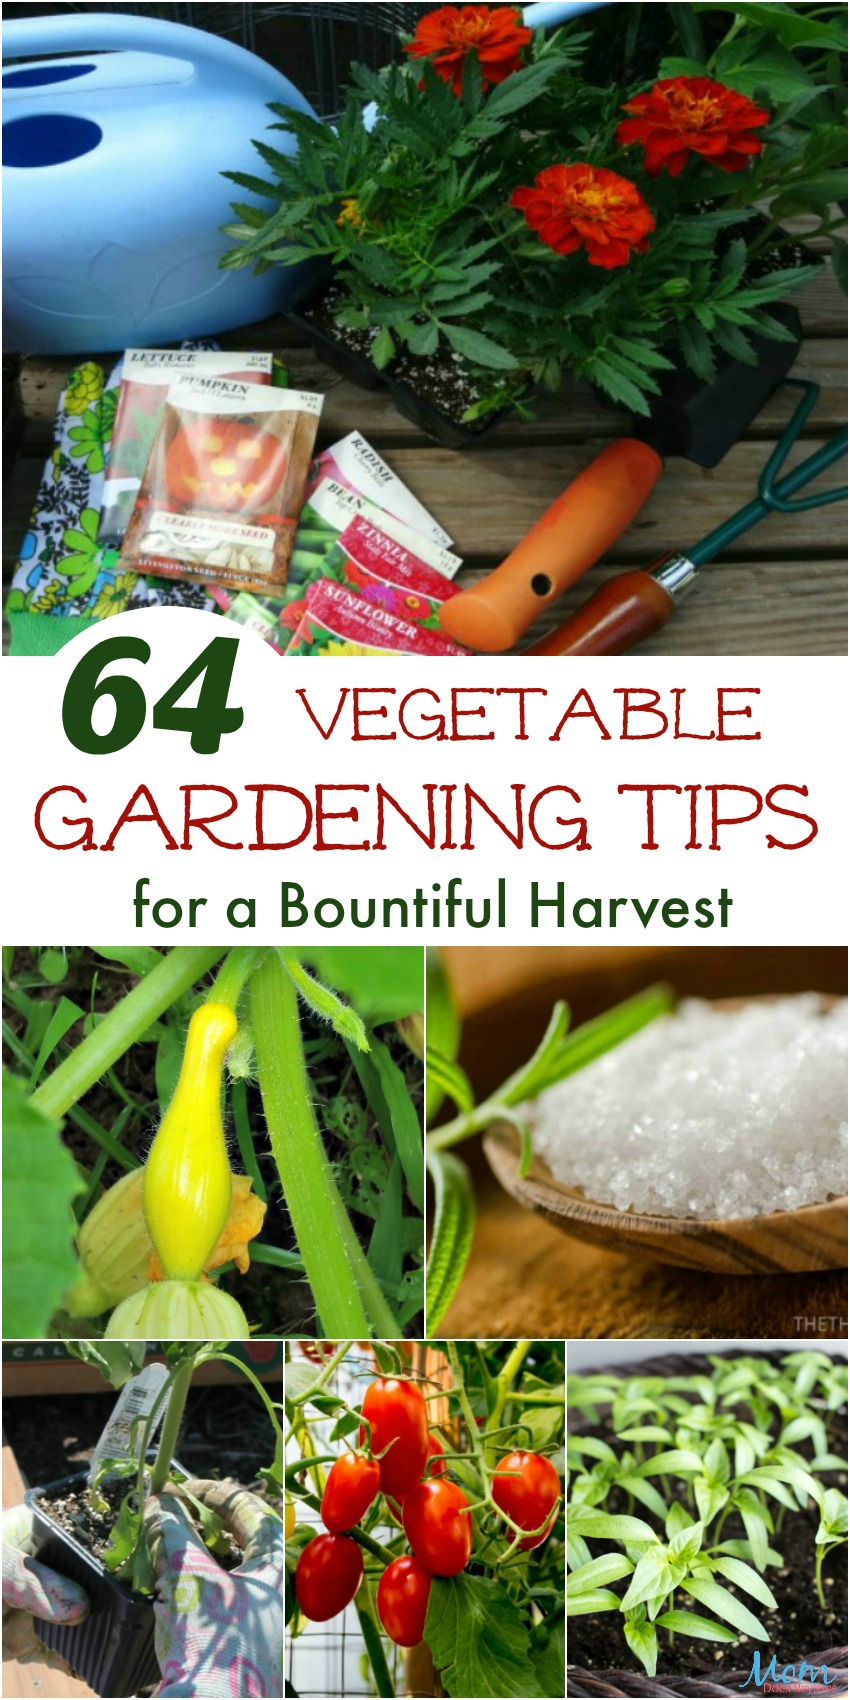 64 Vegetable Gardening Tips for a Bountiful Harvest banner